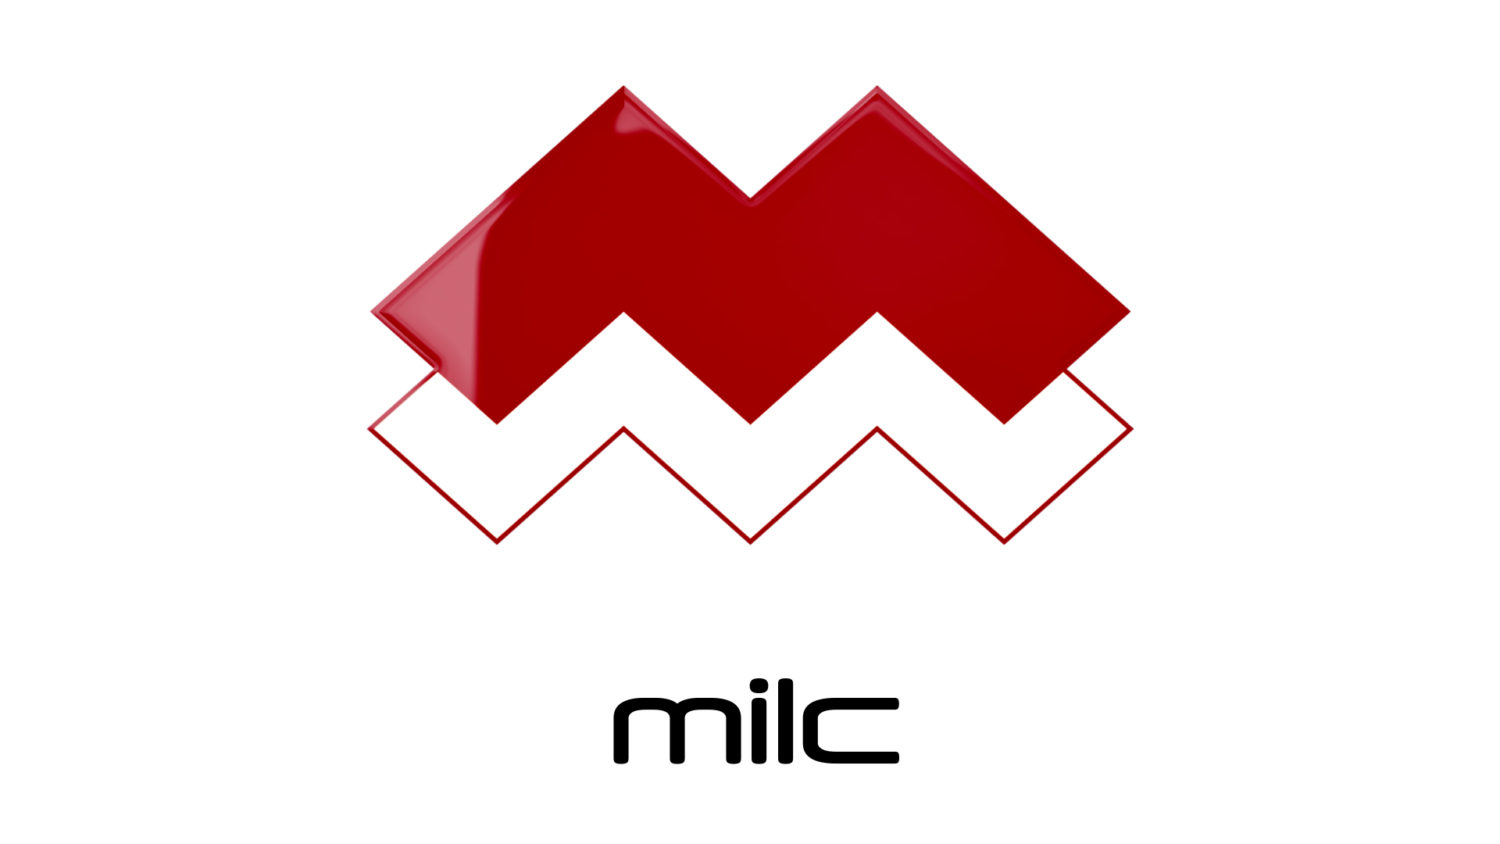 PR. MILC. Logo. RT